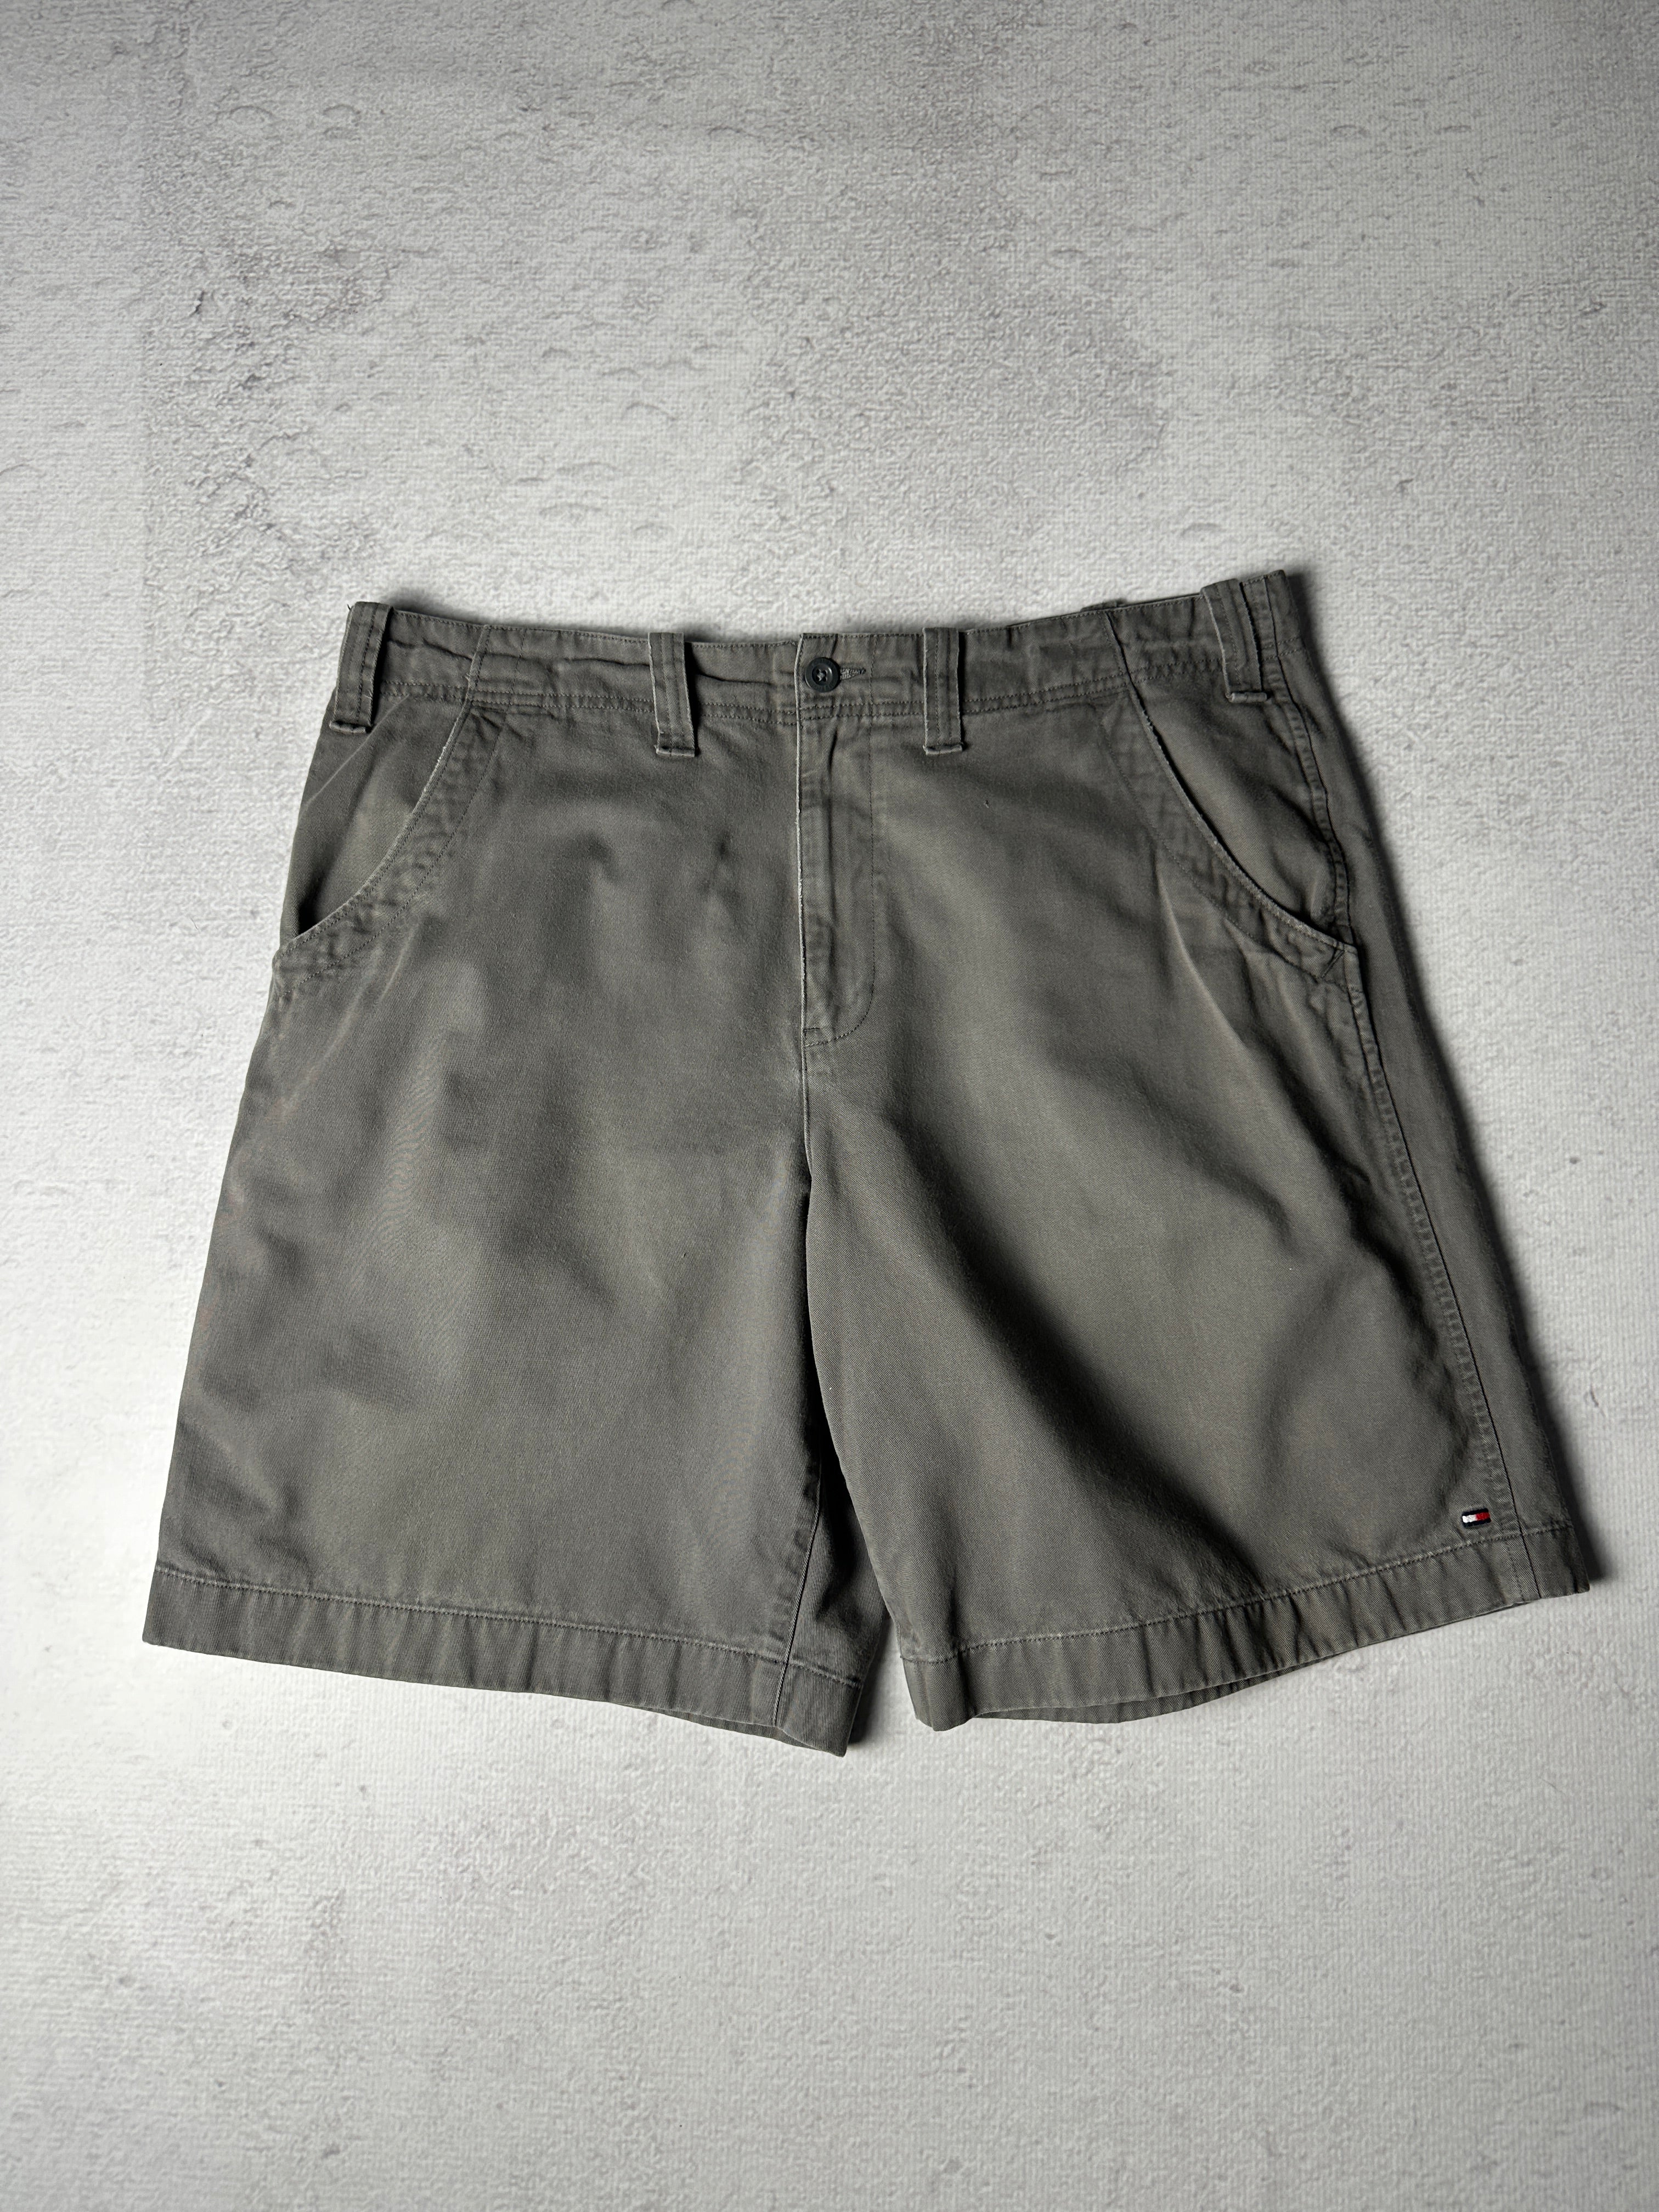 Vintage Tommy Hilfiger Chino Shorts - Men's 40